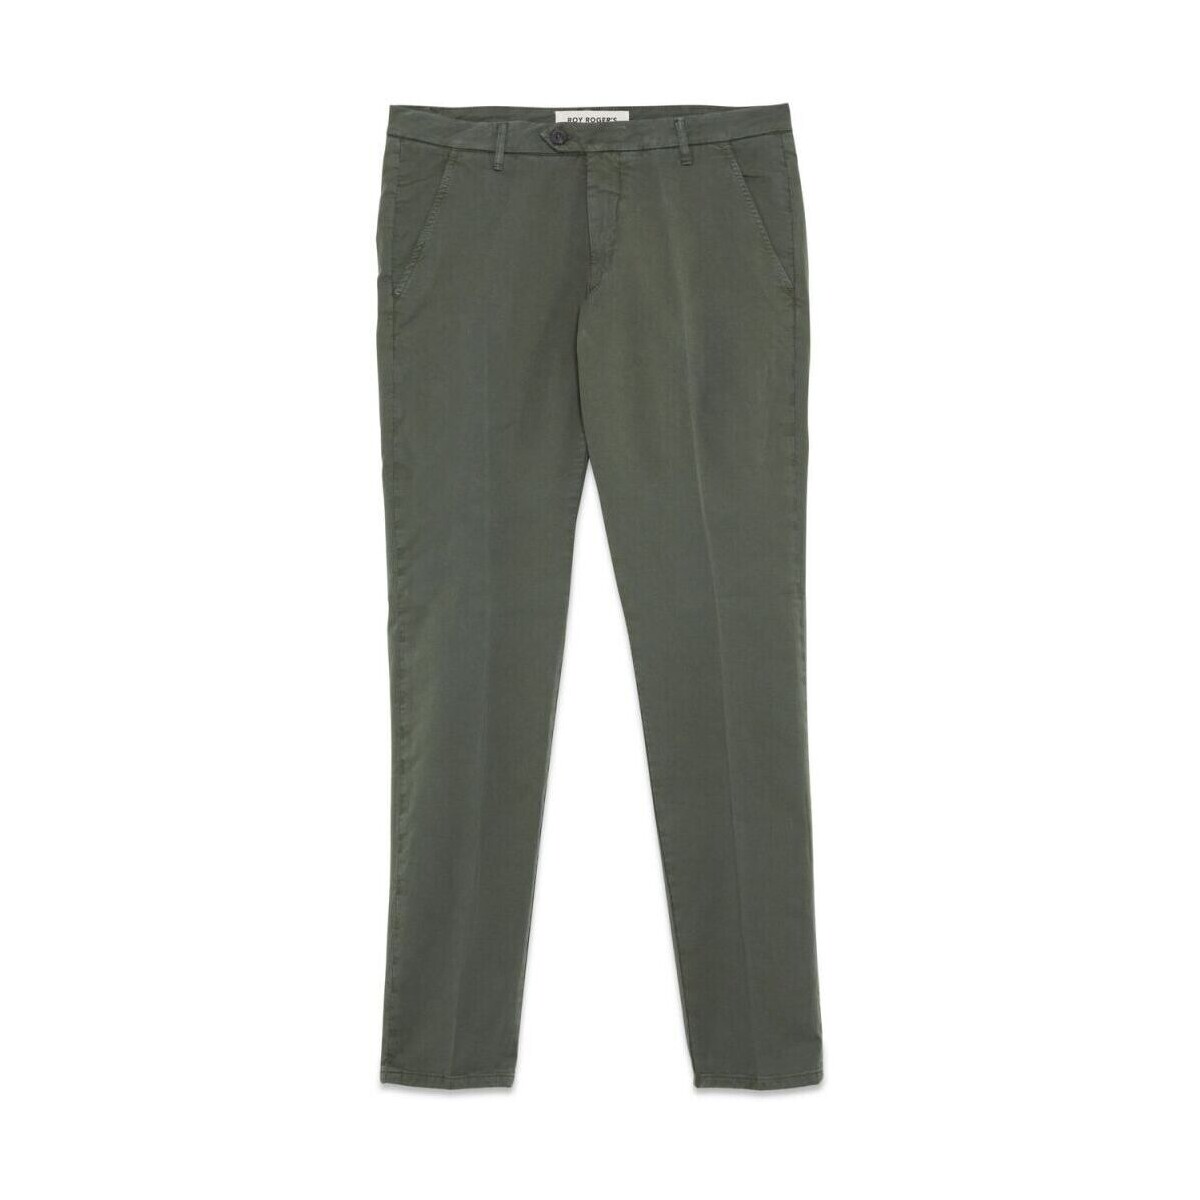 textil Hombre Pantalones Roy Rogers NEW ROLF RRU013 - C9250112-C0015 OLIVE Verde